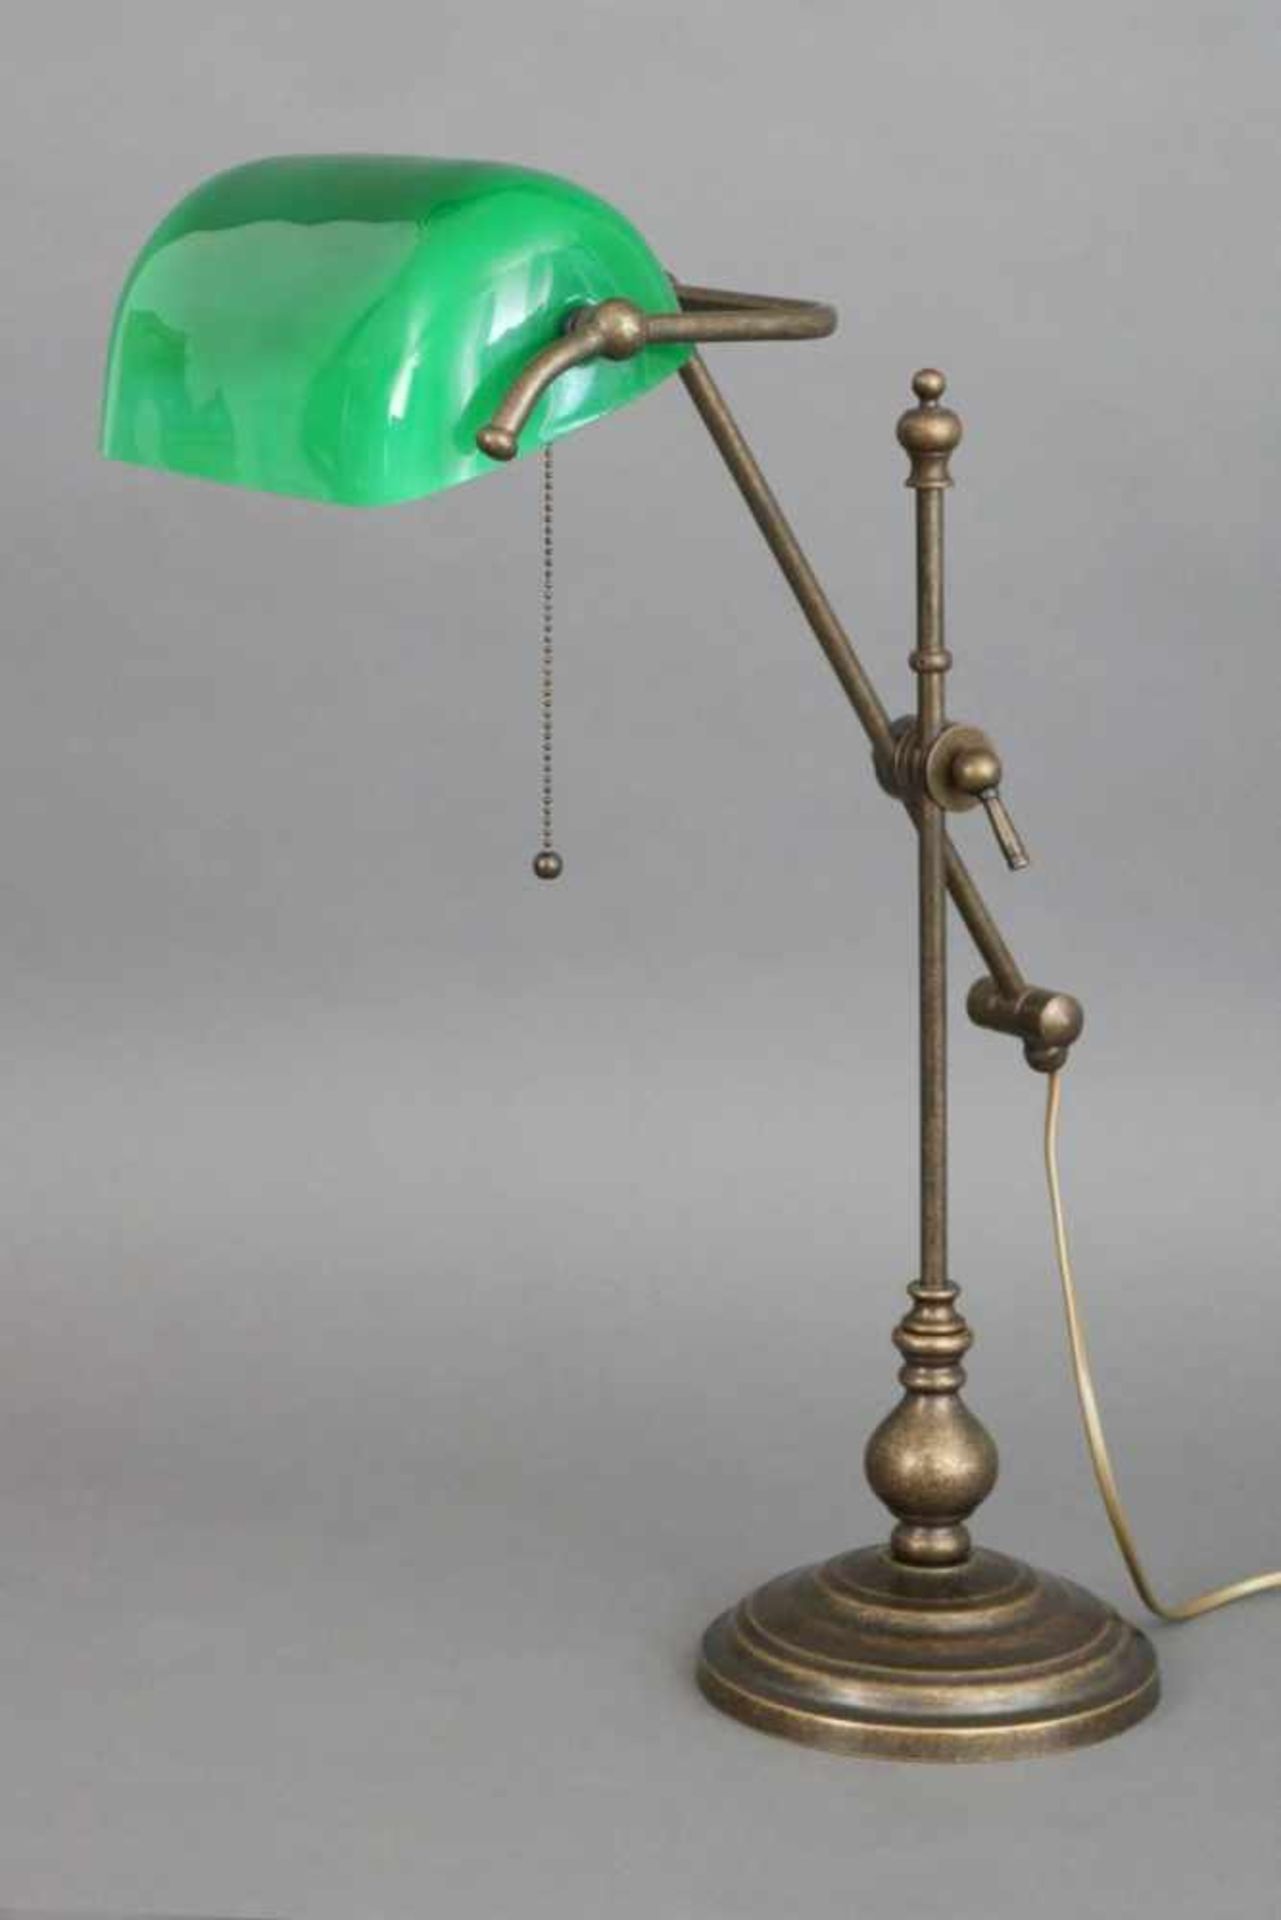 ¨Banker´s lamp¨ im Stile des 19. JahrhundertsFuß Messing, patiniert, Gelenkarm, grüner Glasschirm, 1